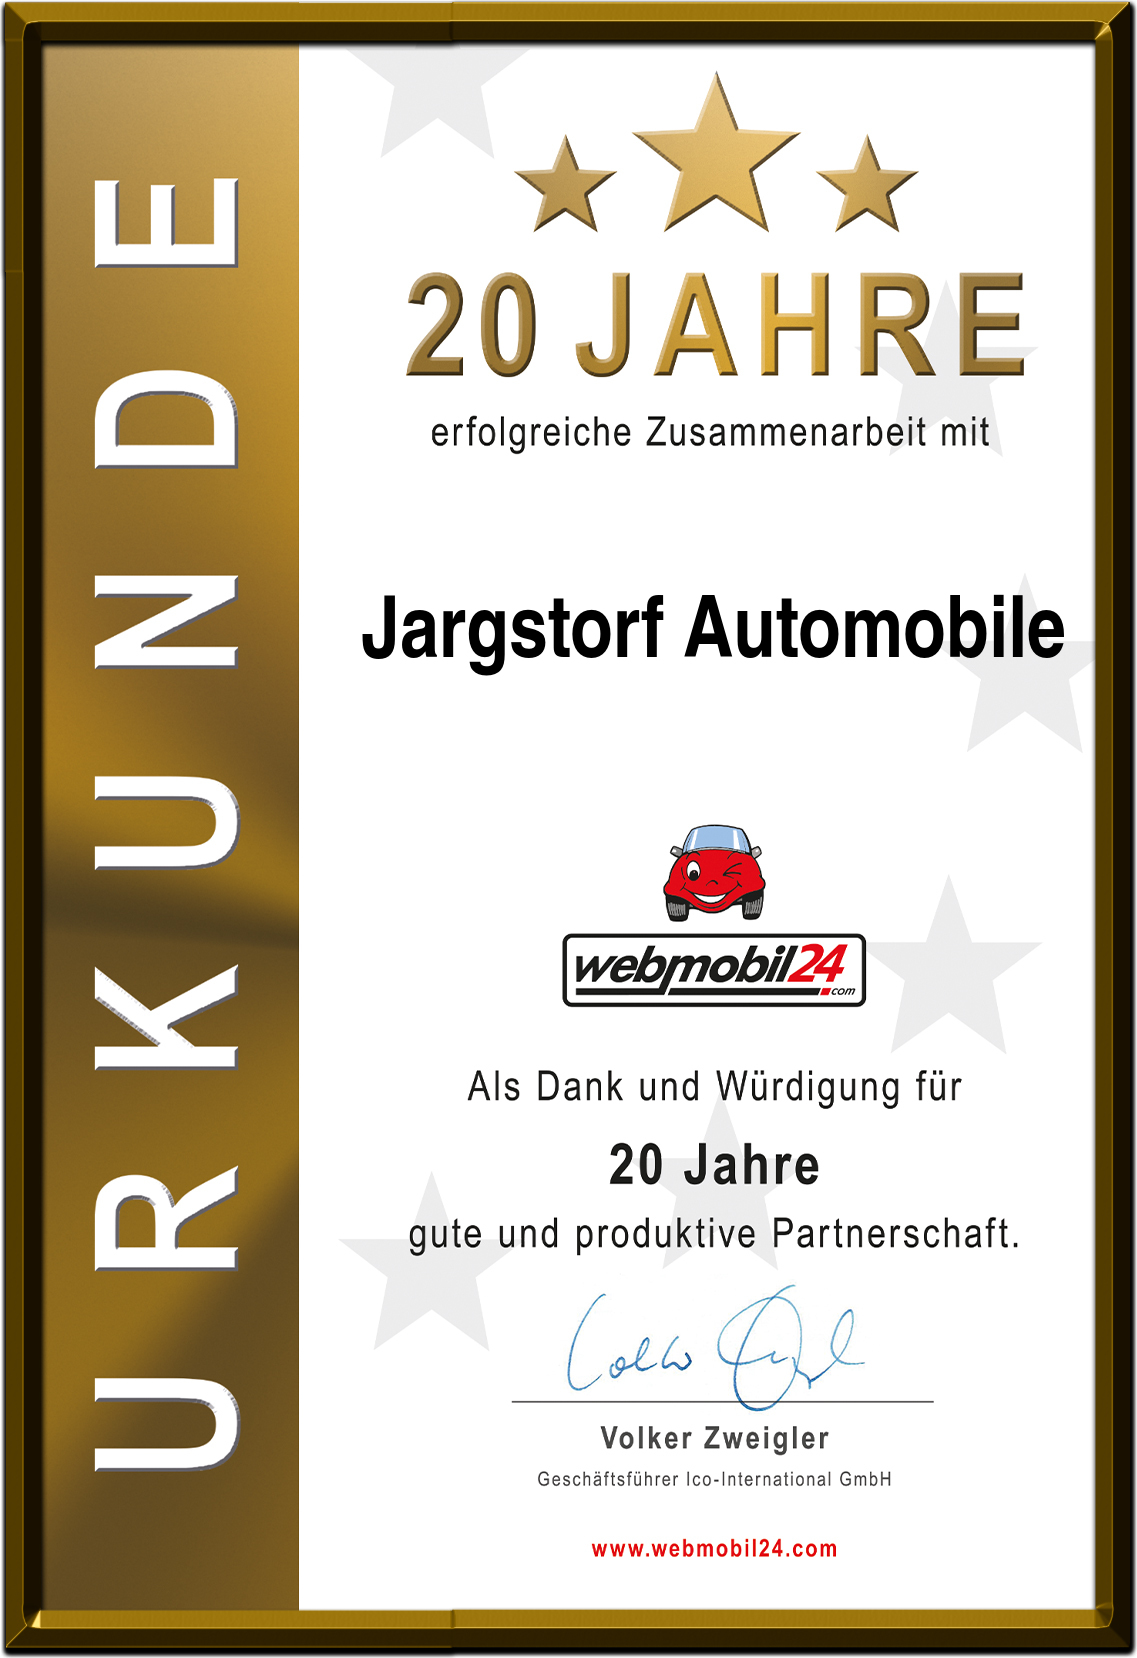 Jargstorf Automobile